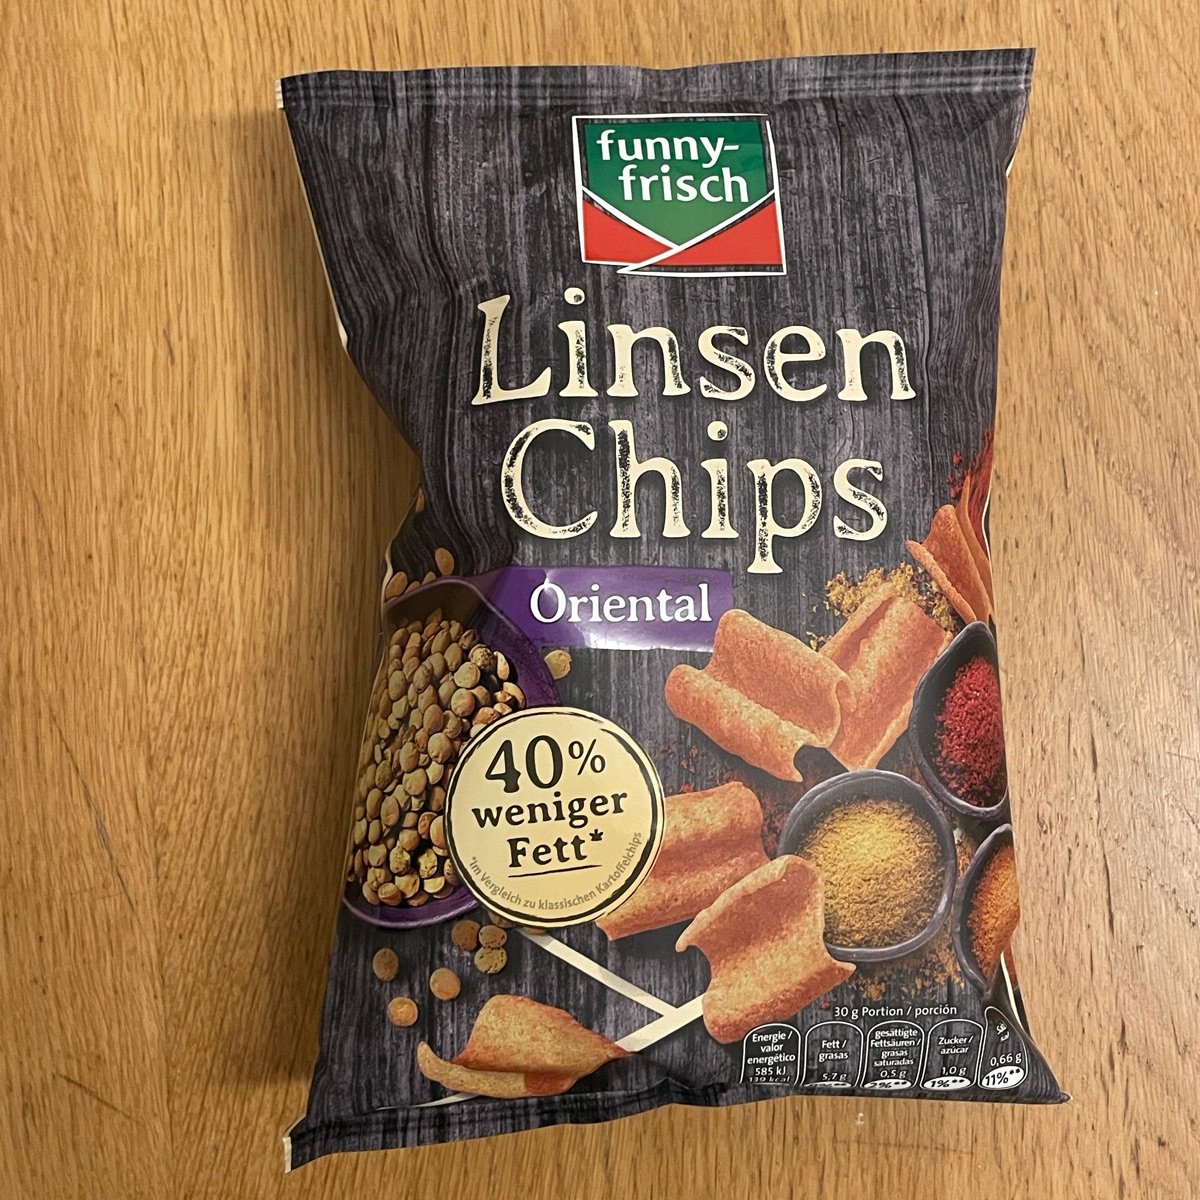 Funny-frisch Linsen Chips Oriental Review